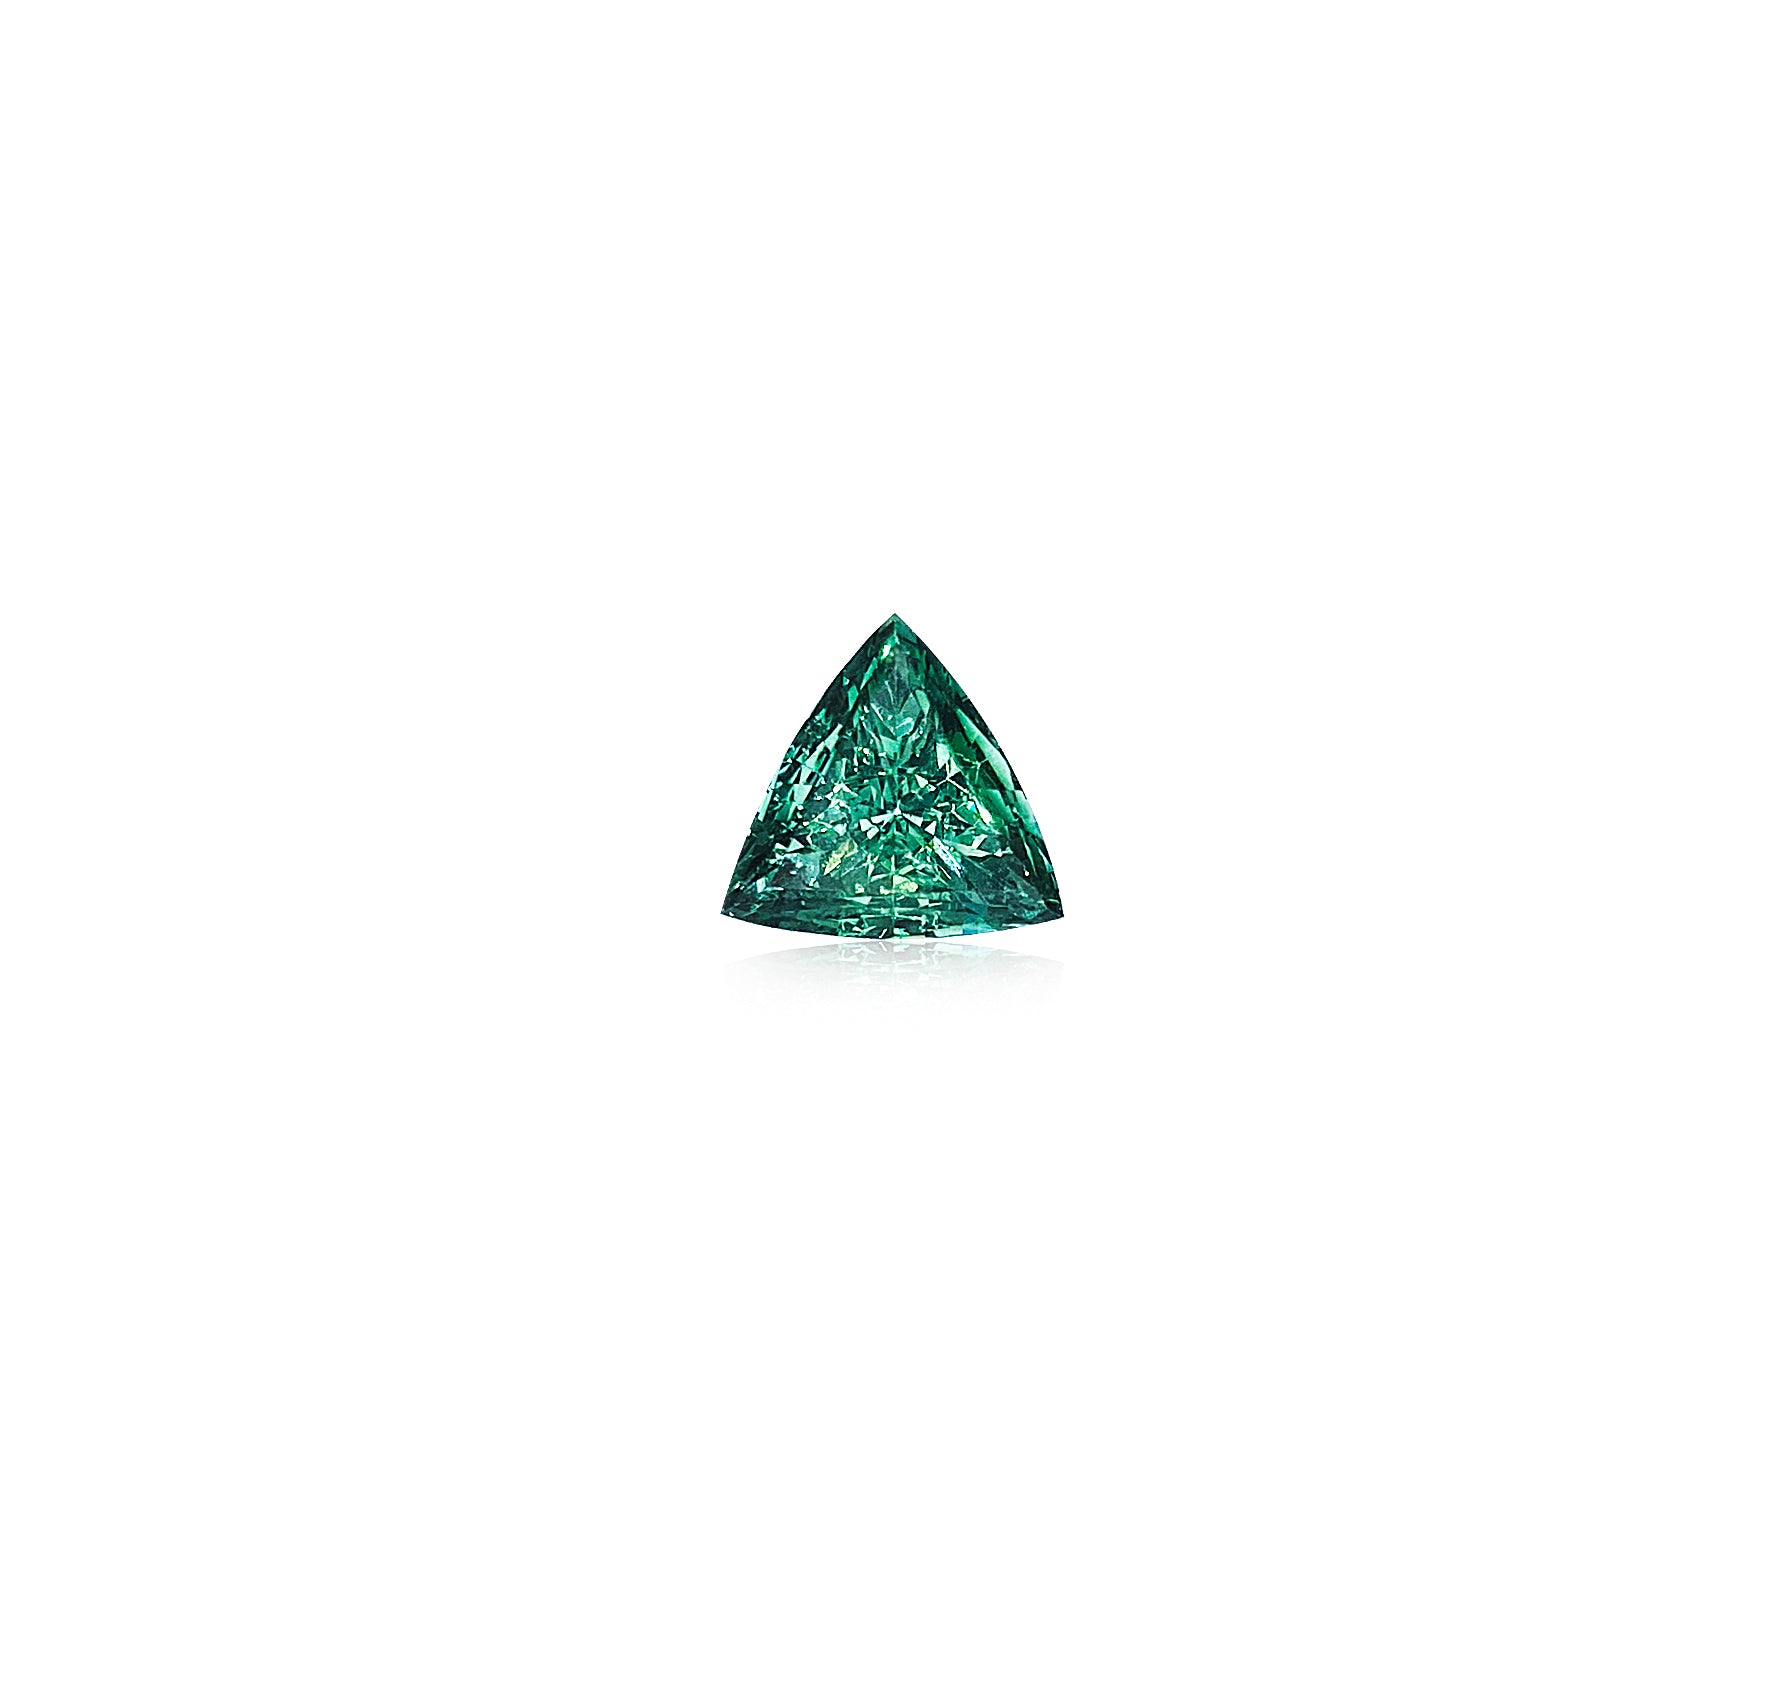 1.78 Intense Green Trillion Diamond (COLOR and CLARITY ENHANCED)